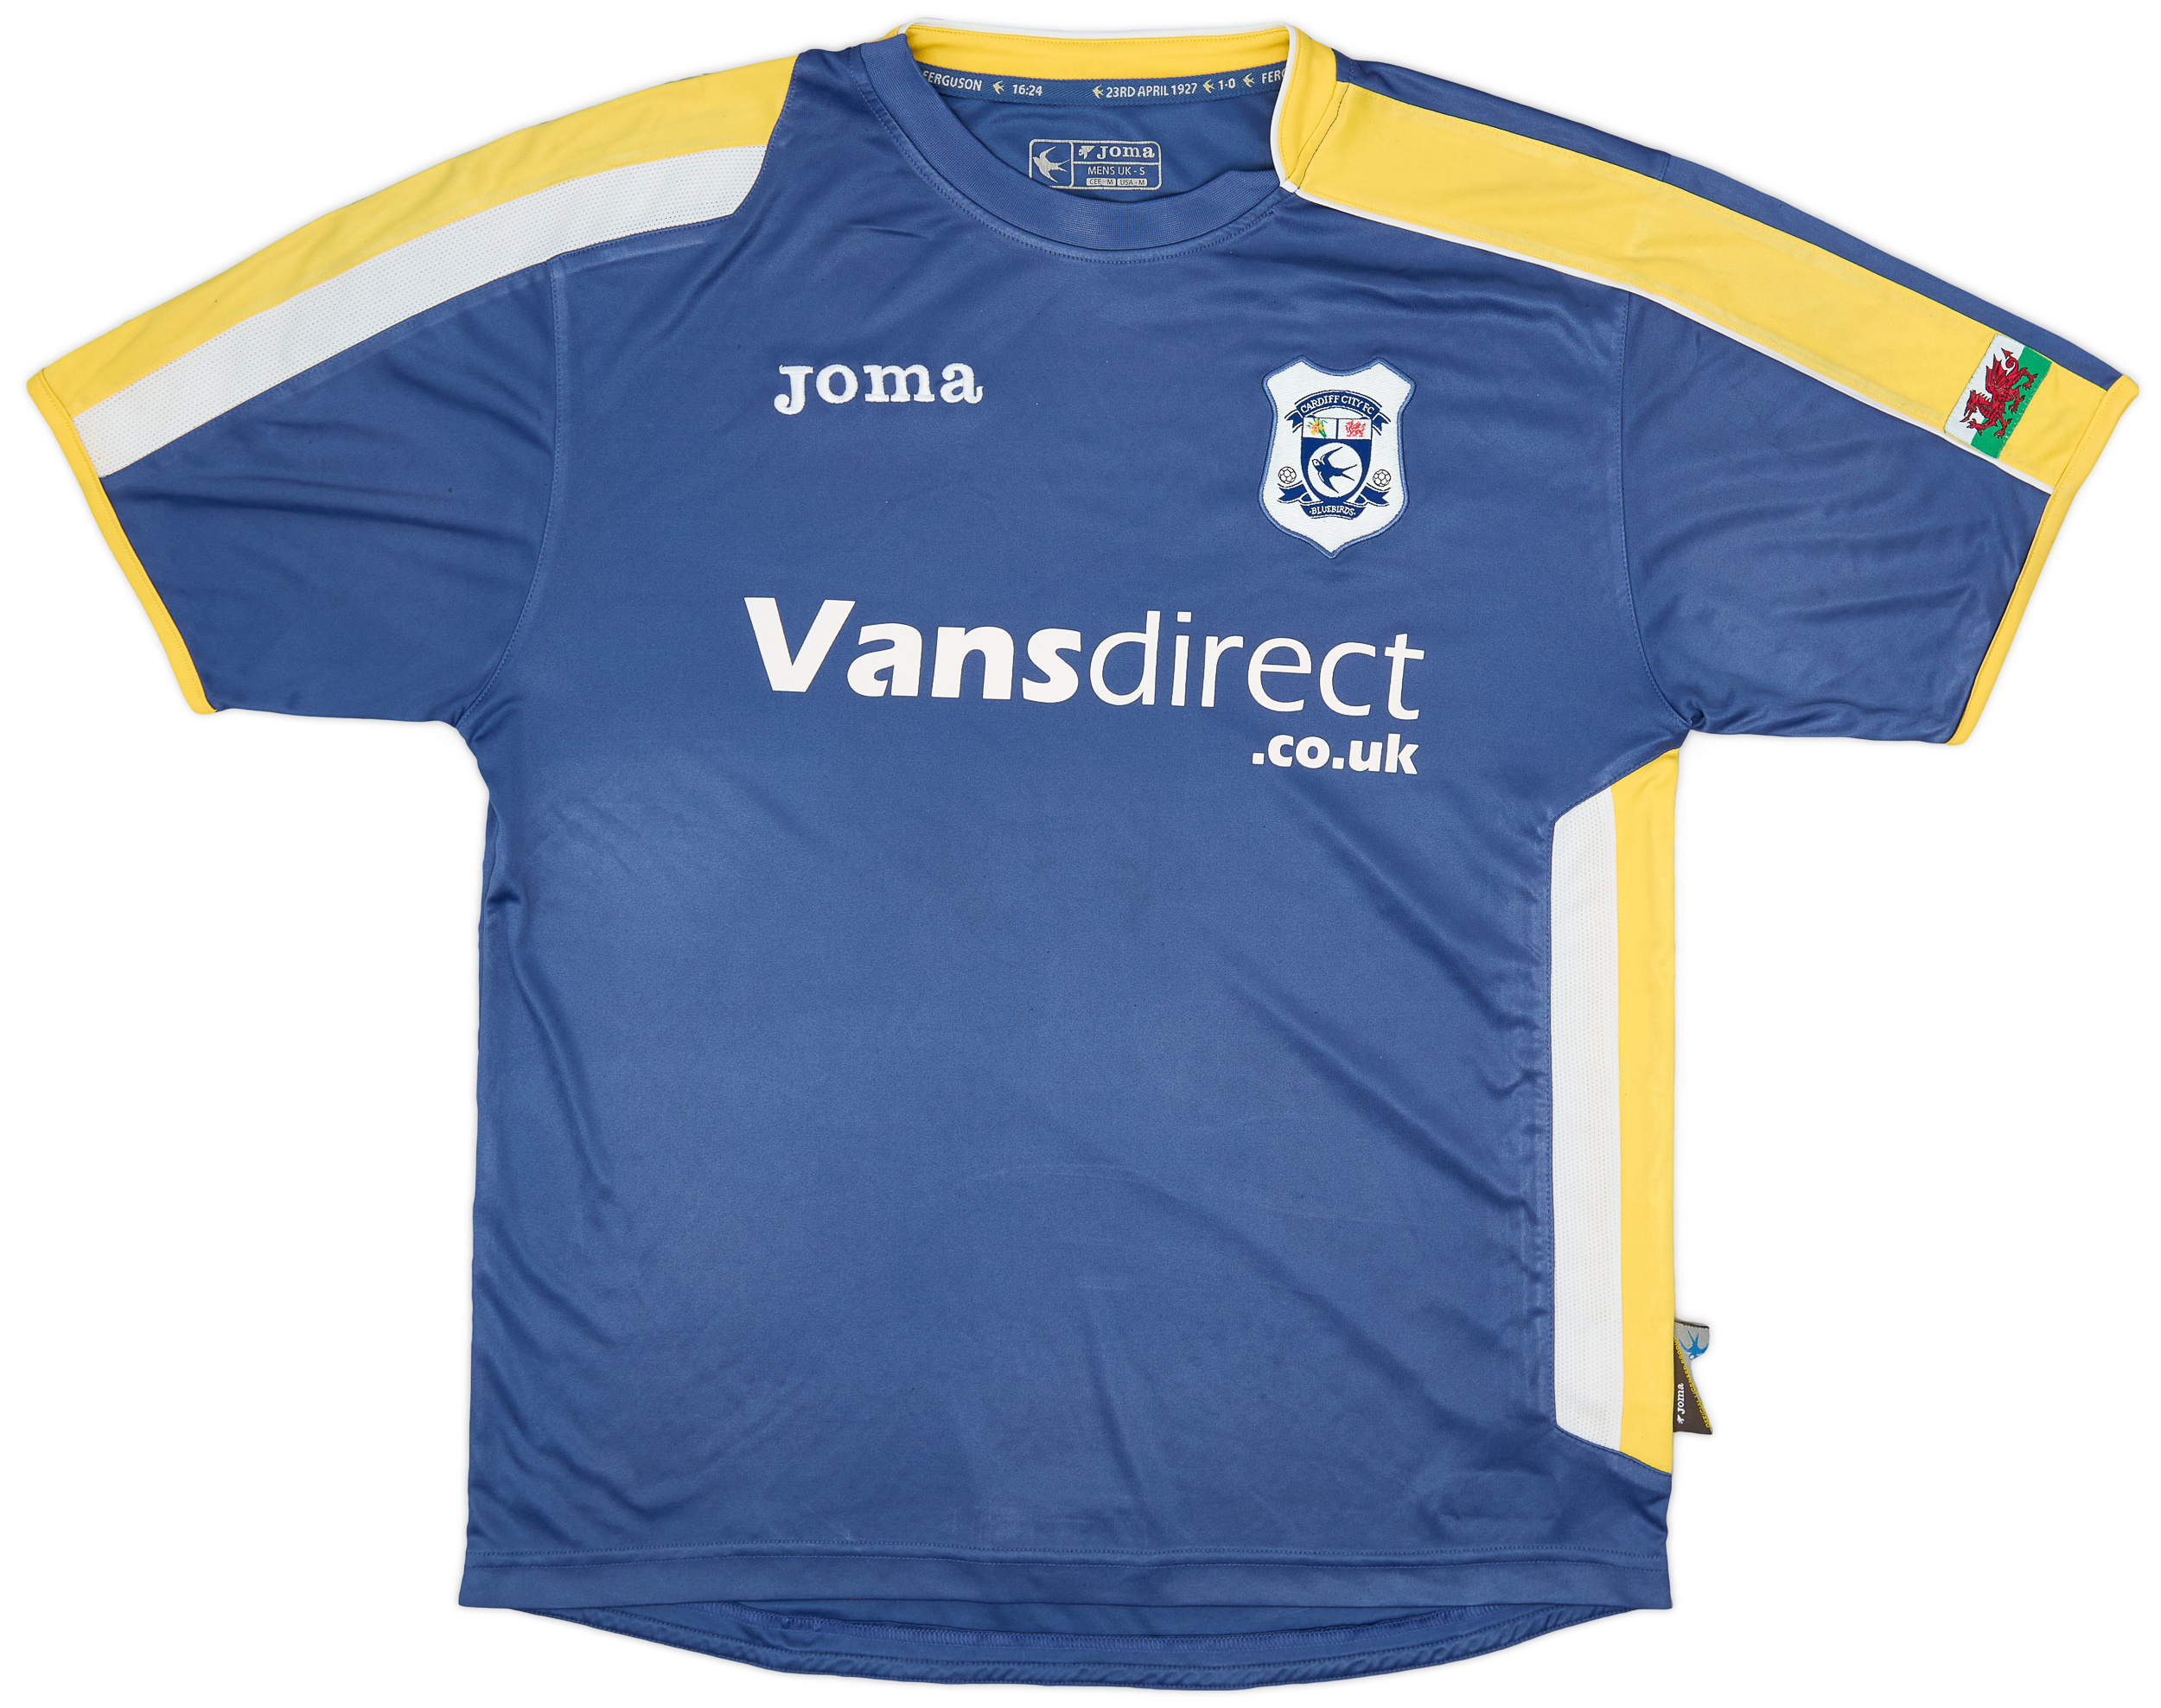 2008-09 Cardiff City Home Shirt - 6/10 - ()